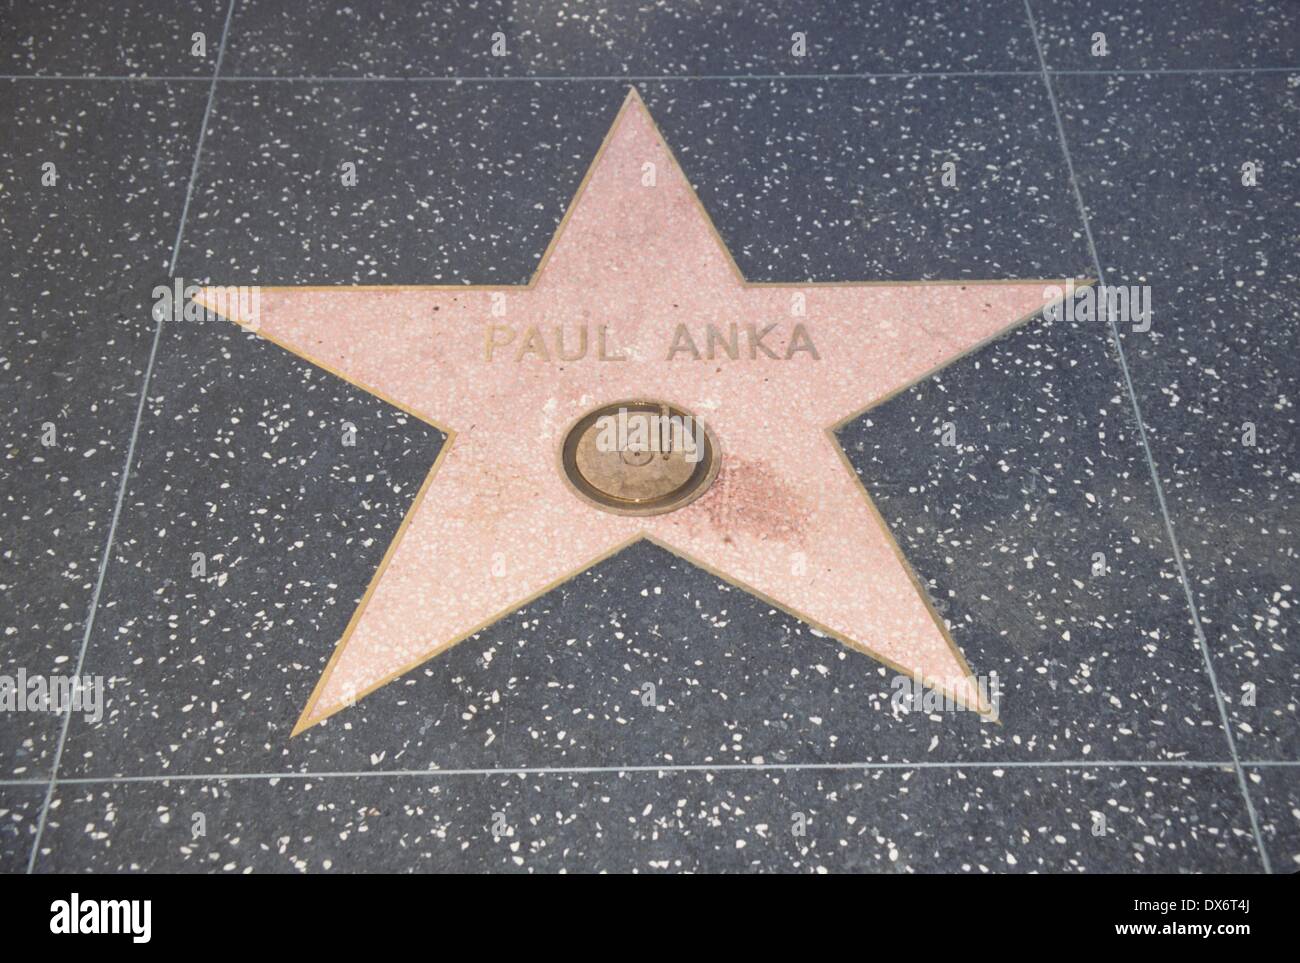 PAUL ANKA 1995.k2139lr.(Credit Image: © Lisa Rose/Globe Photos/ZUMAPRESS.com) Stock Photo